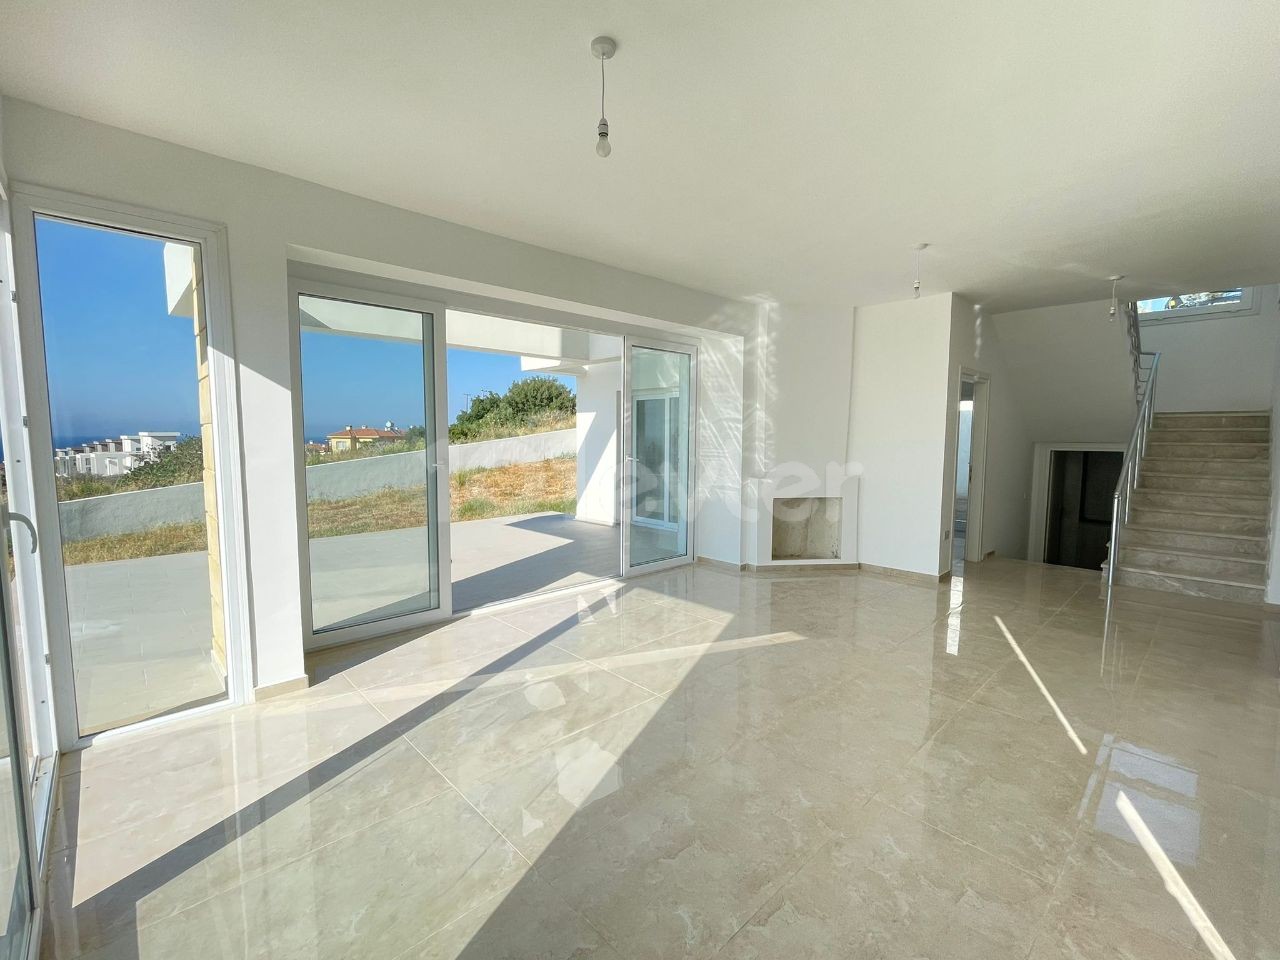 600 m2 Ultralux Villa mit Pool in Kyrenia Yesiltepe 235.000 Gbp ohne Pool 215.000 Gbp ** 